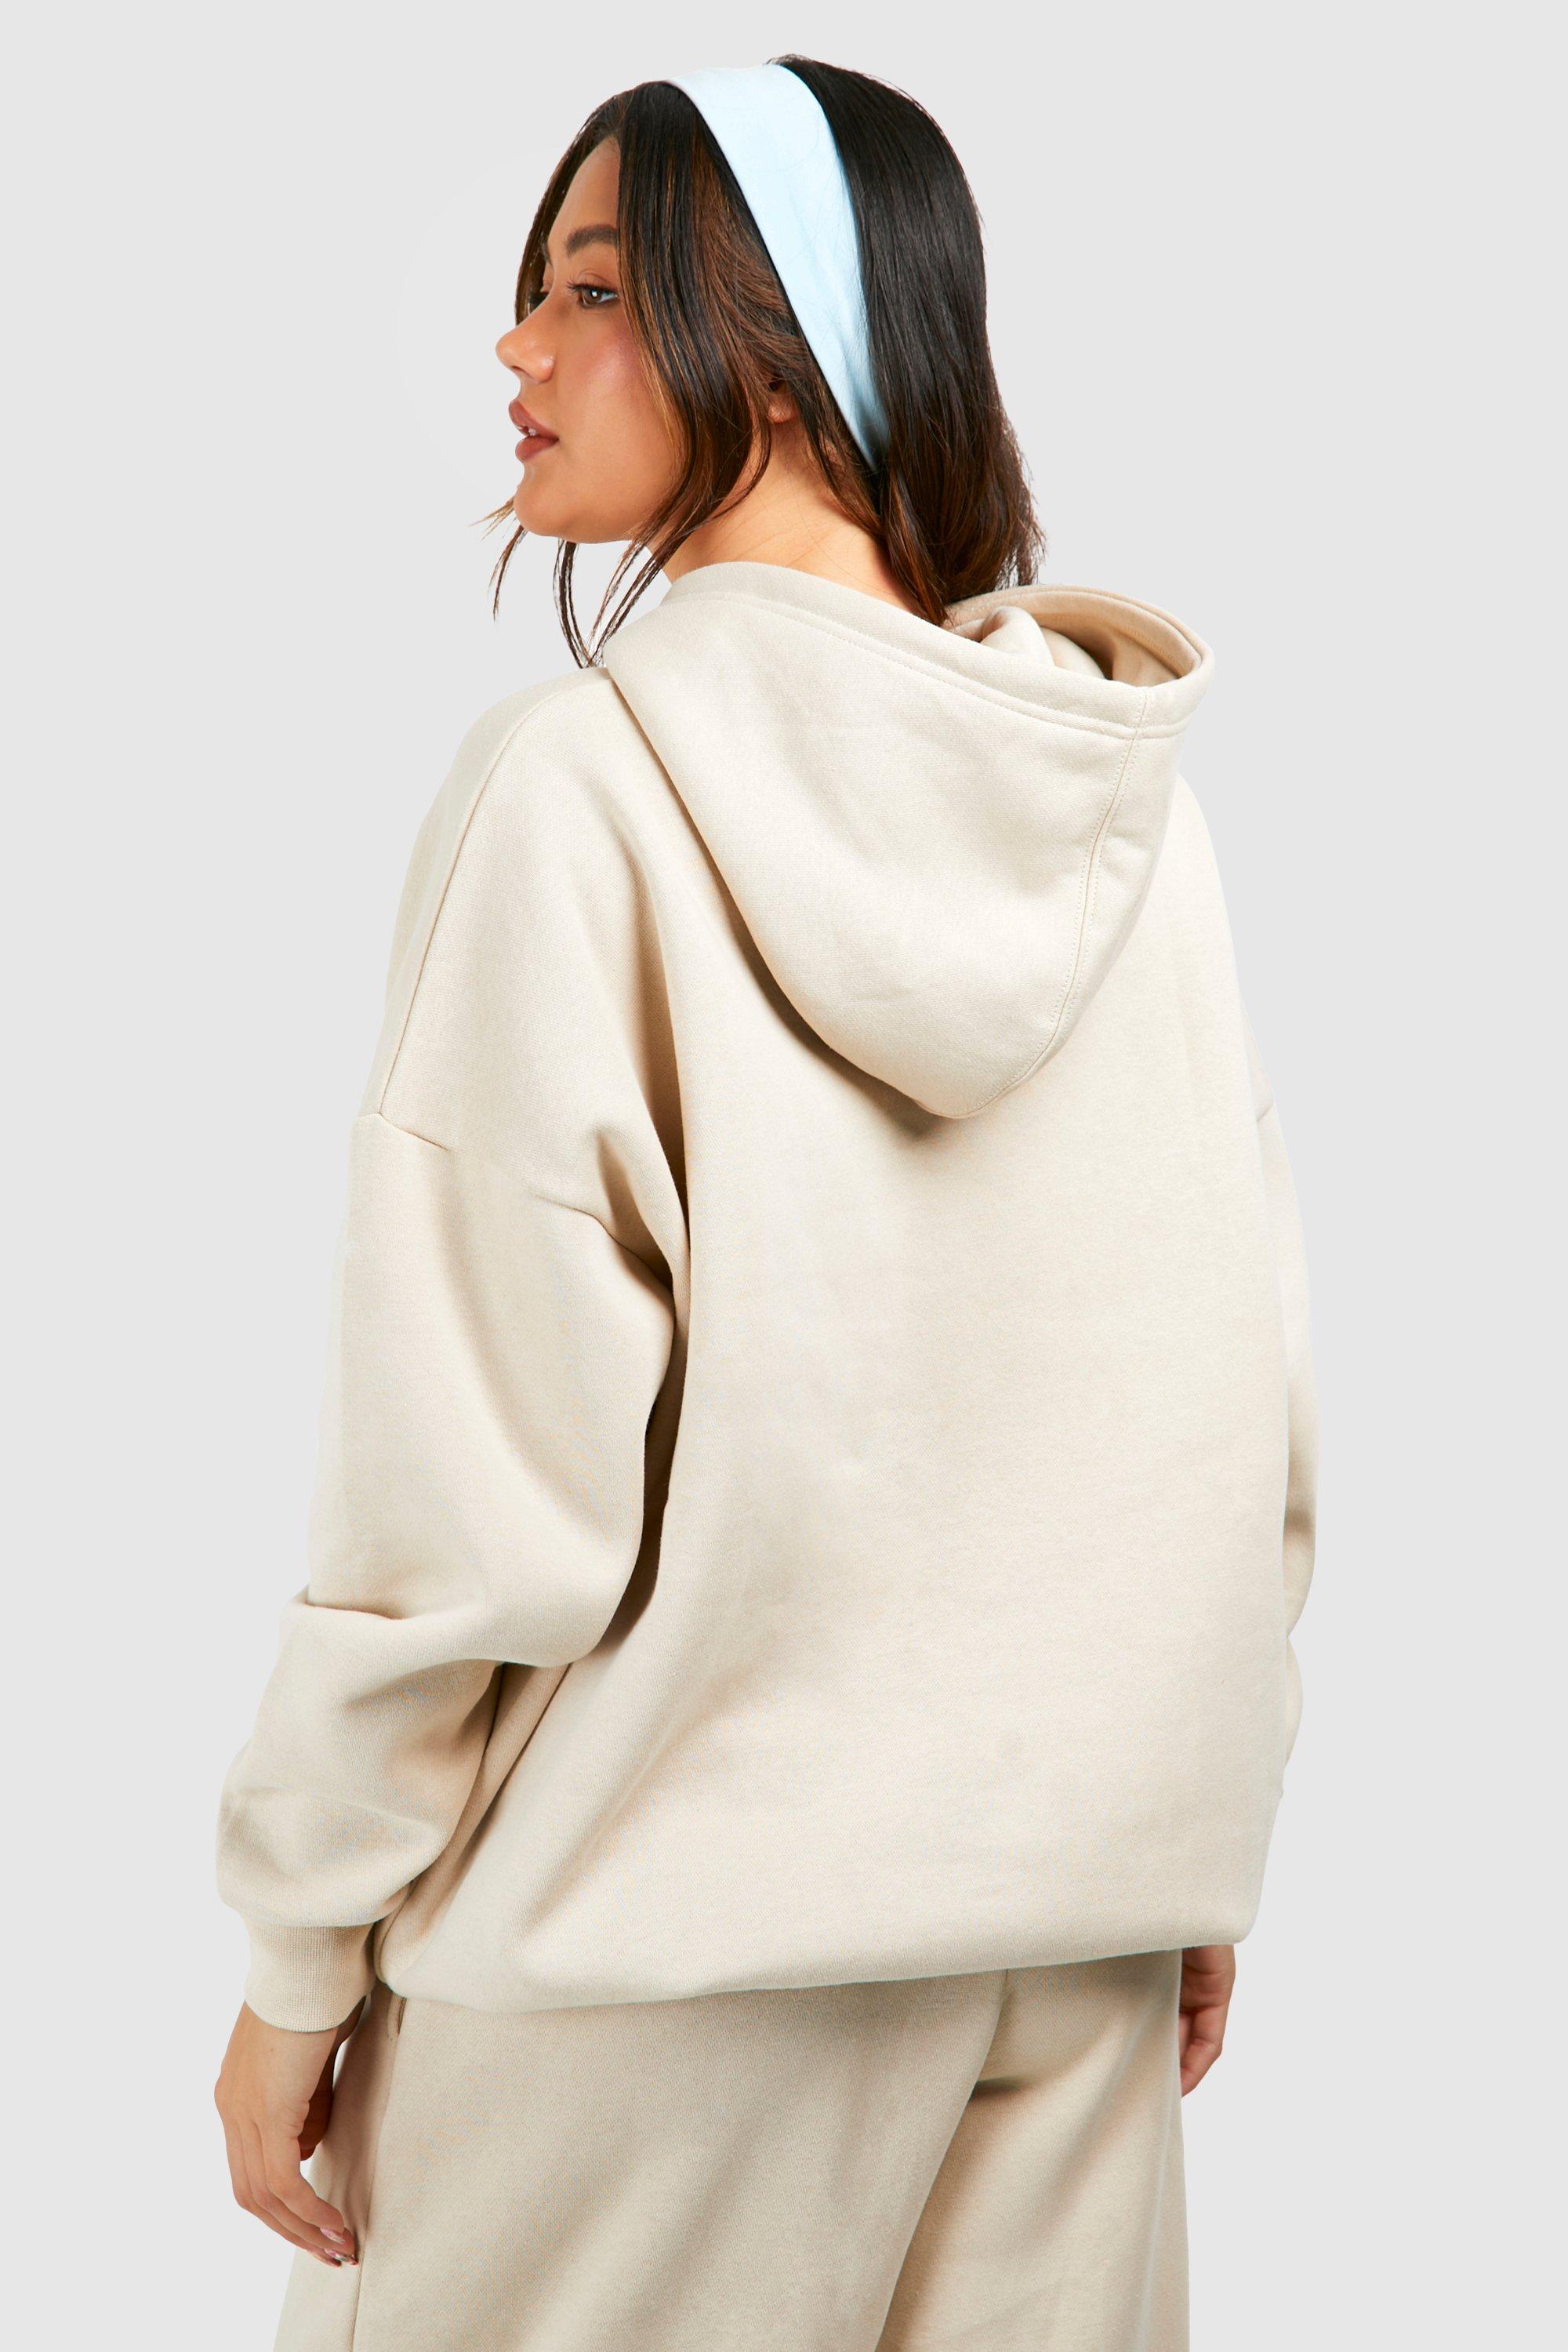 Dsgn Studio Applique Oversized Hood For Women-Bho-2380-Stone